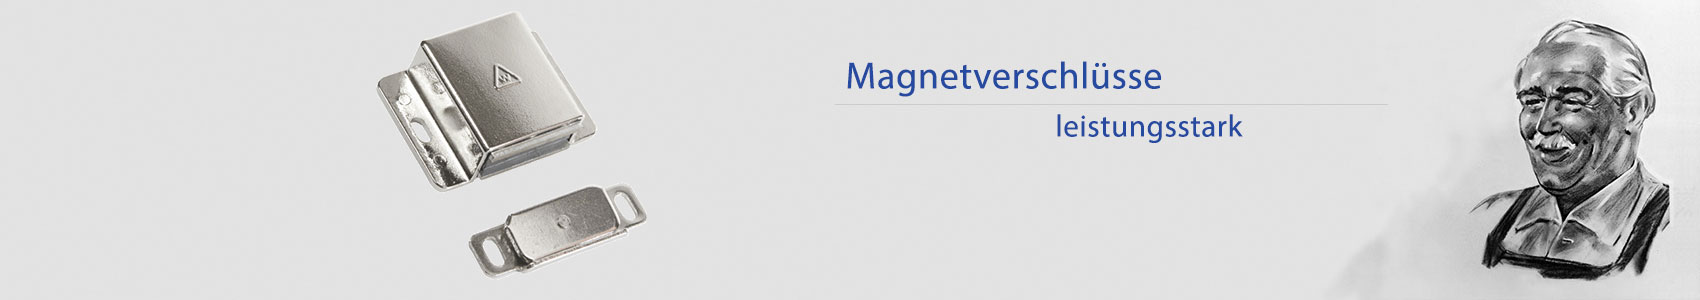 Magnetverschlüsse